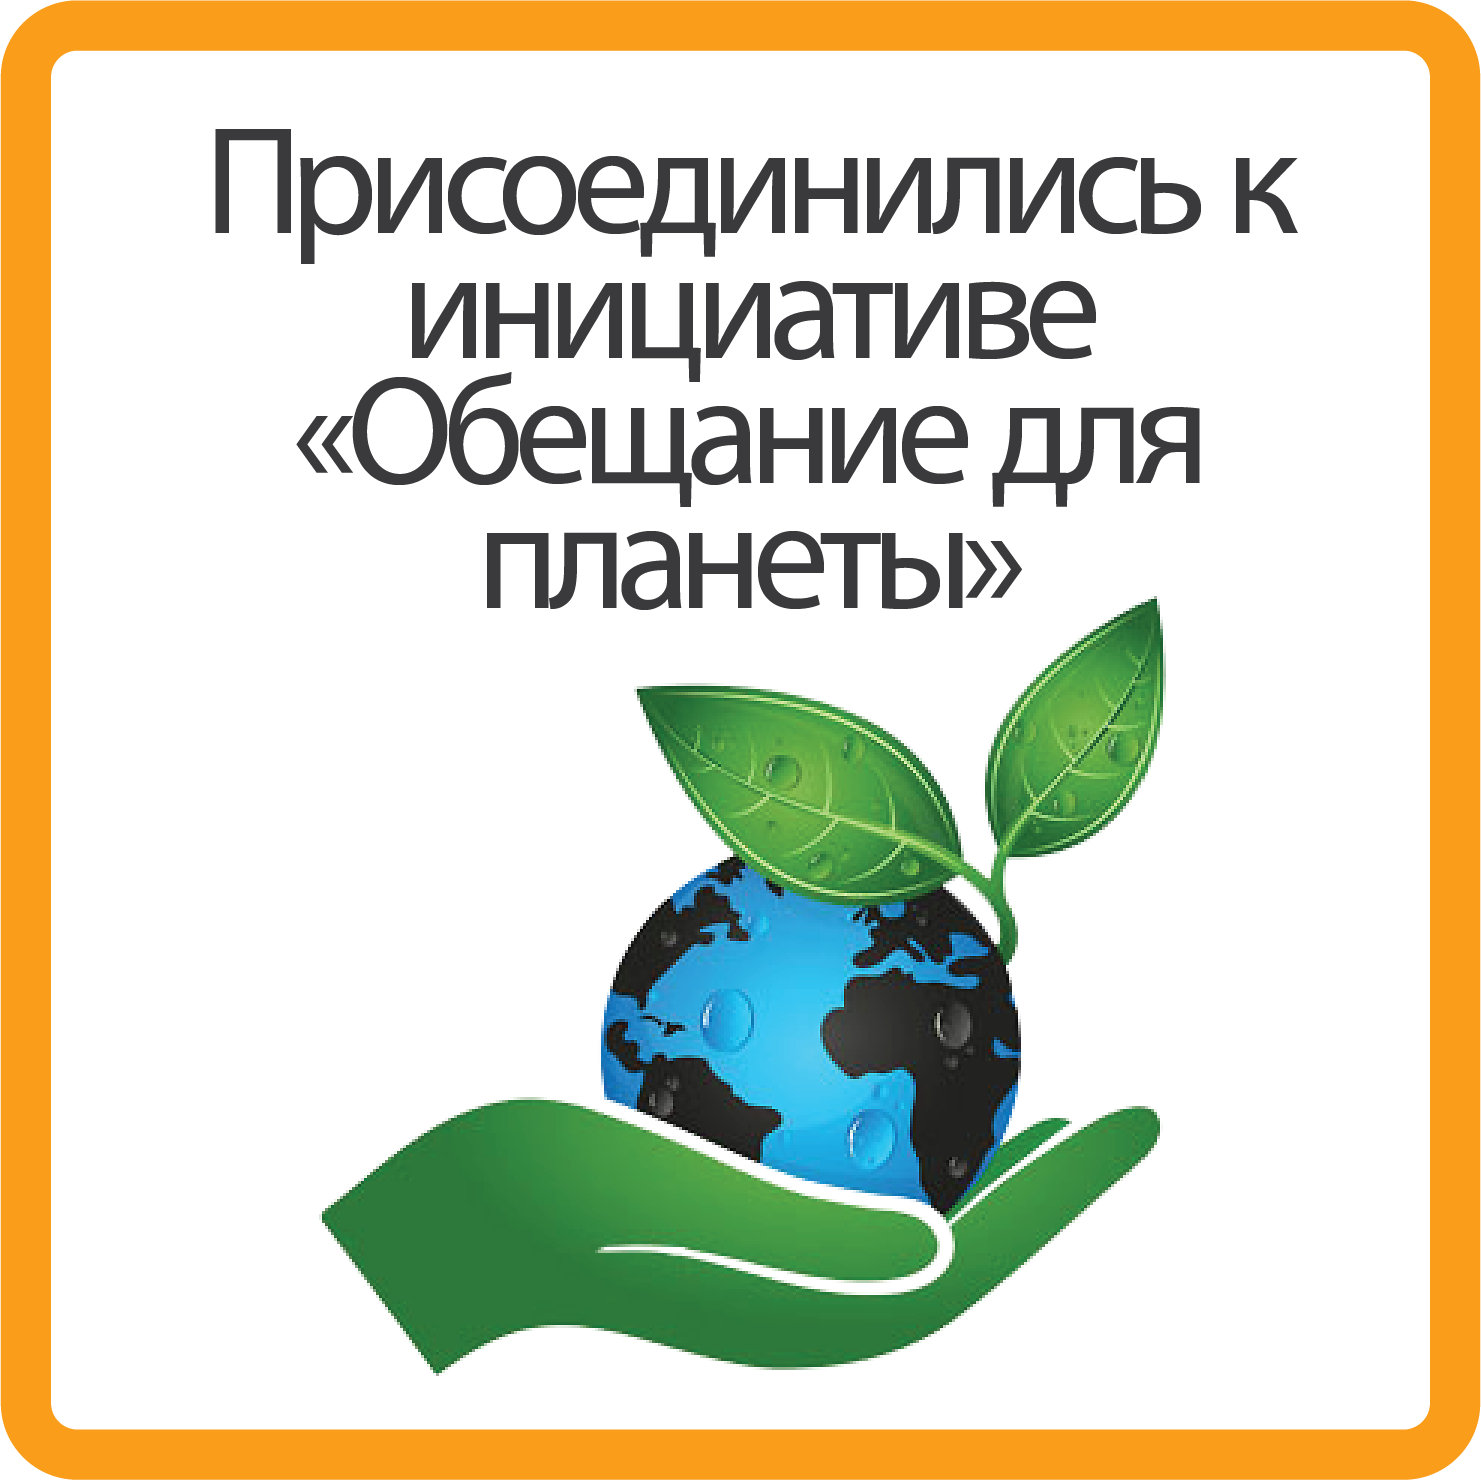 Sustainability planet initiative_B_russia